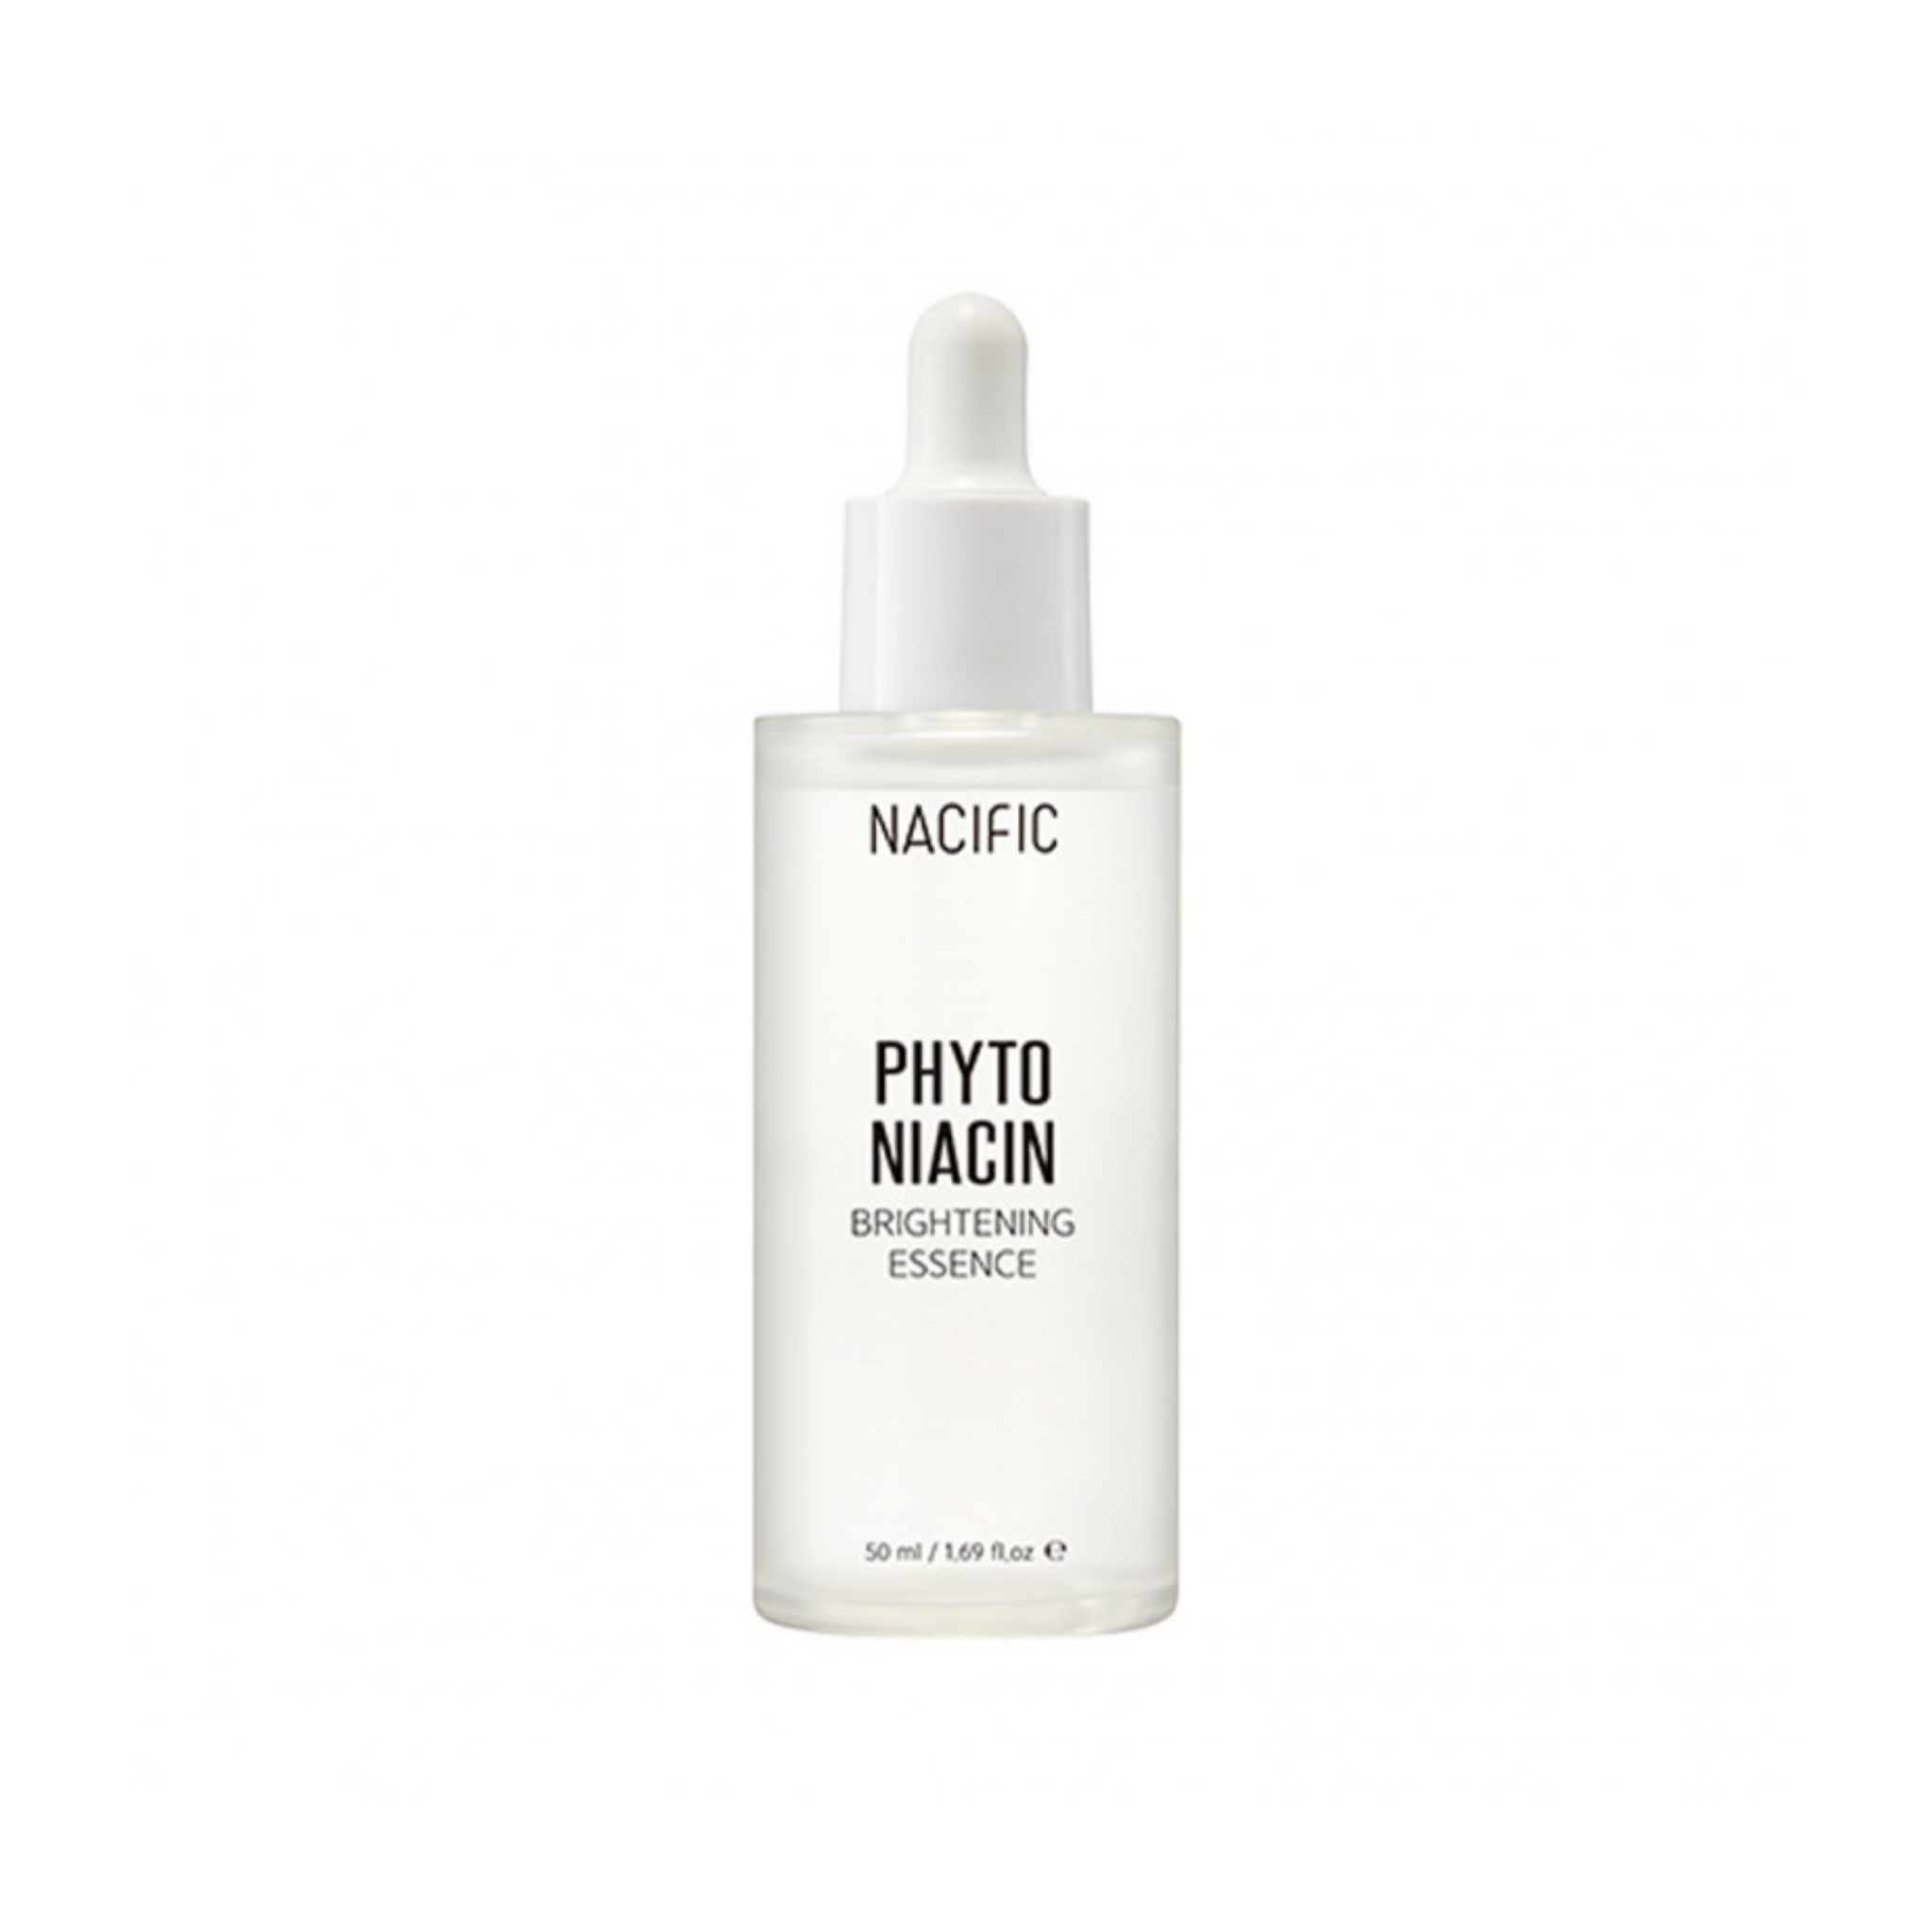 NACIFIC Phyto Niacin Brightening Essence (50ml)